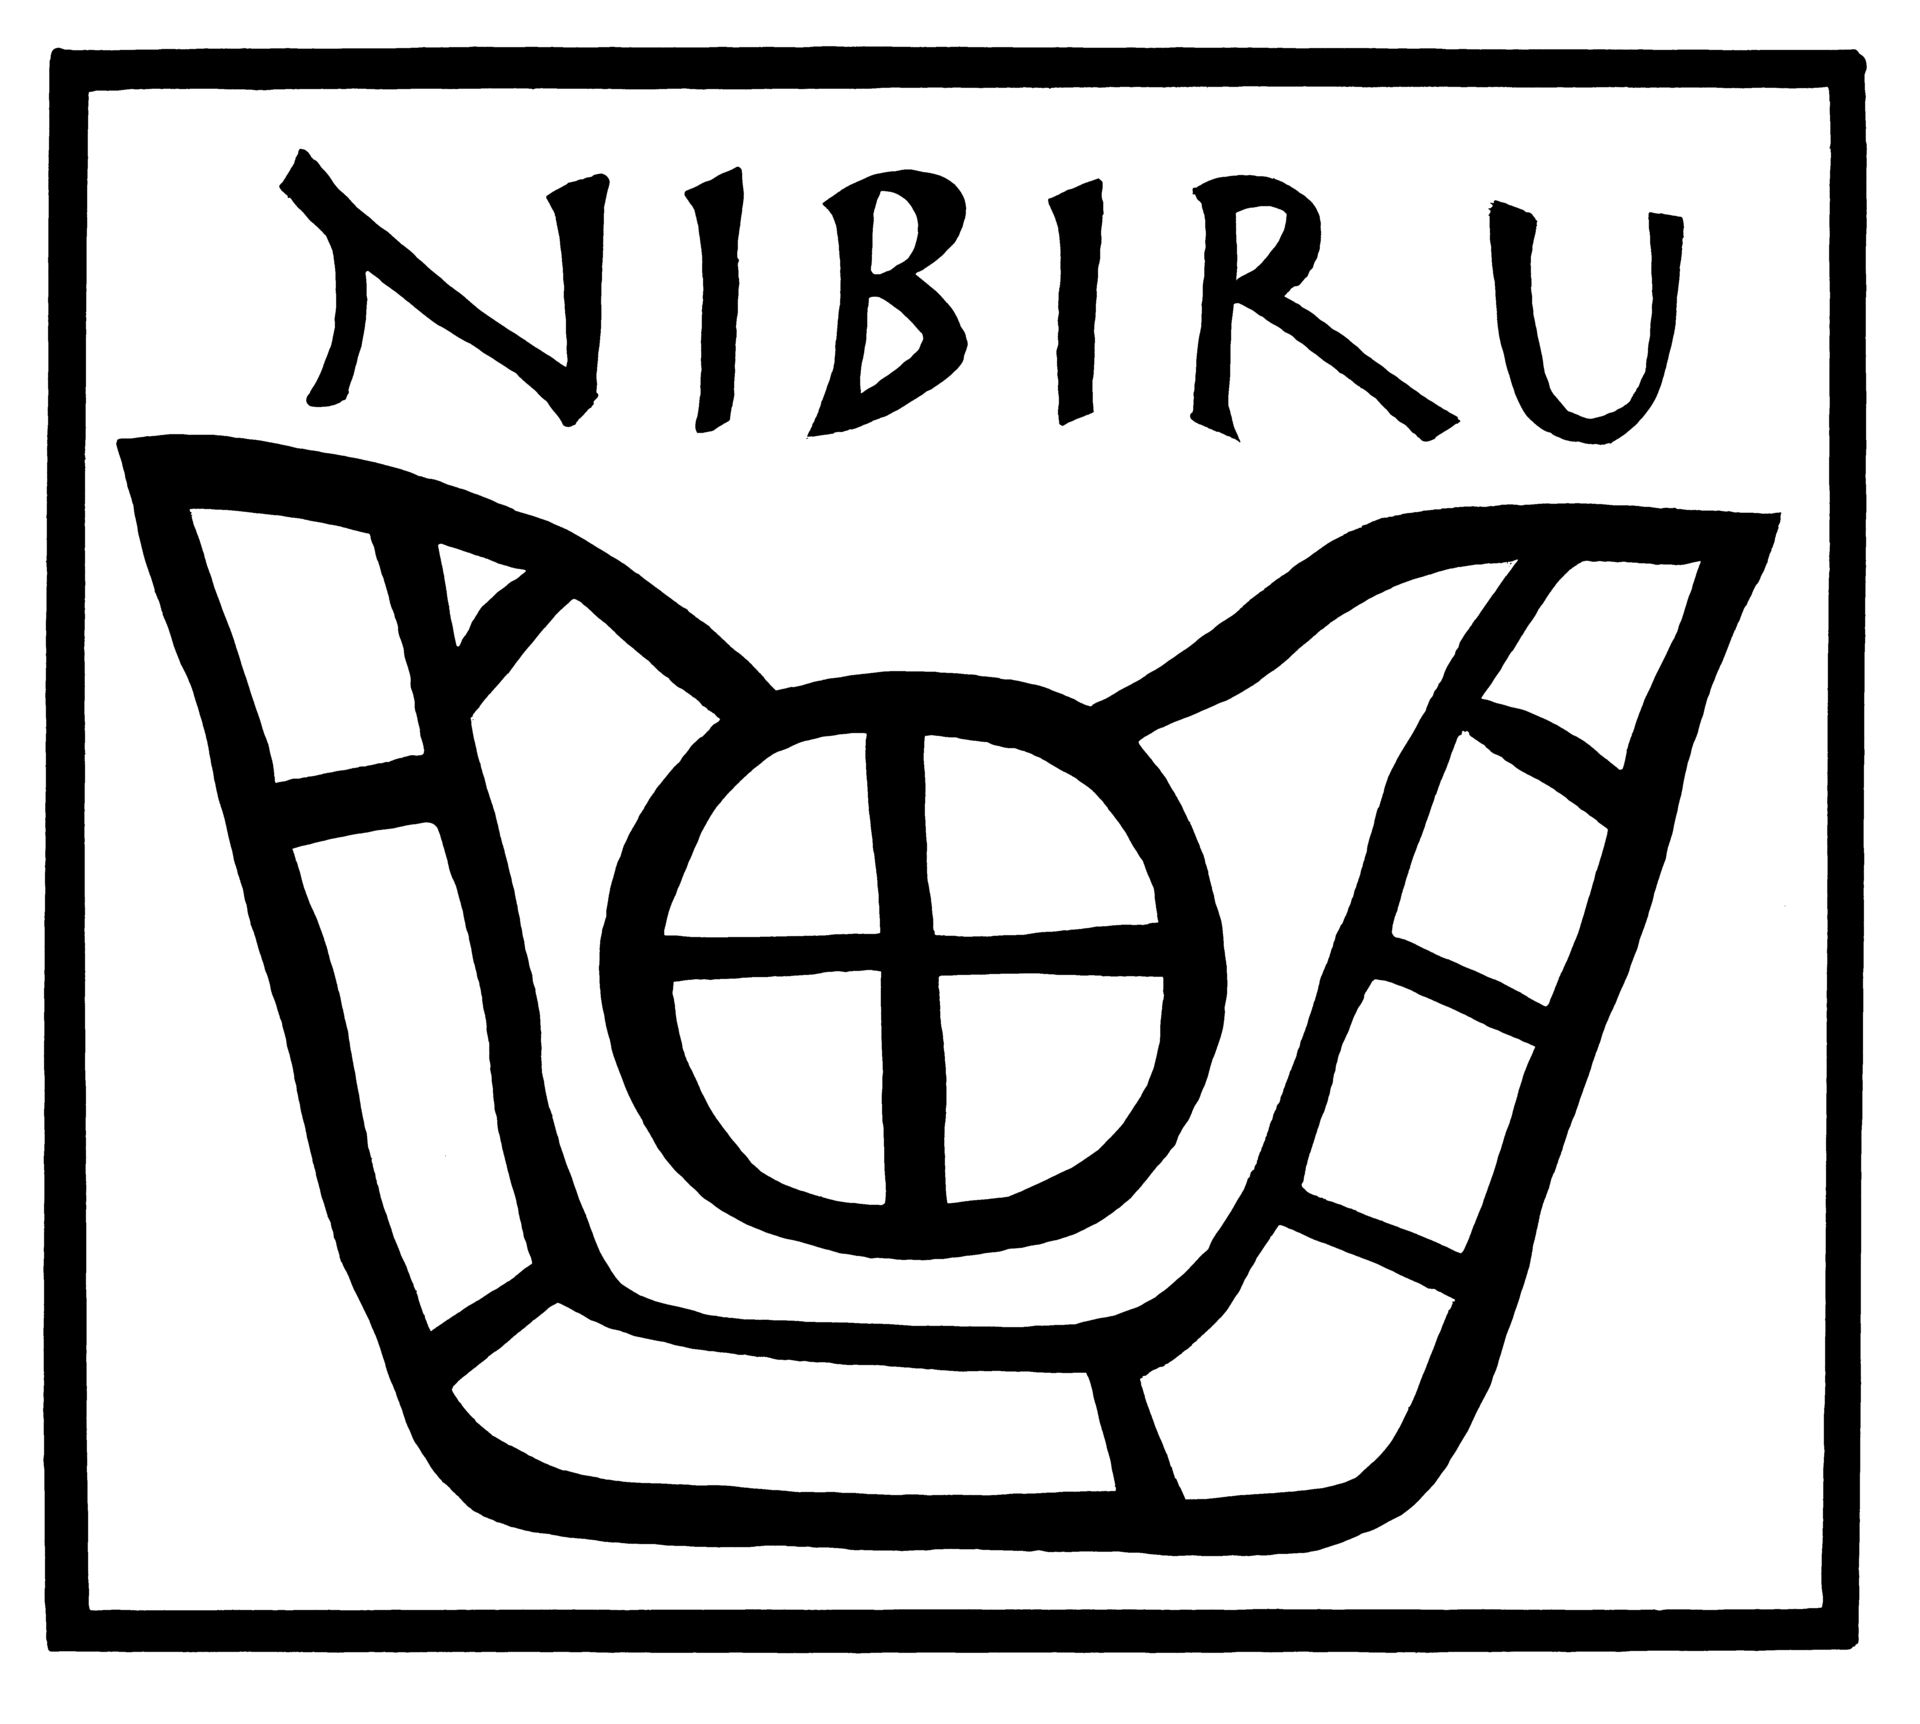 Nibiru Publishers